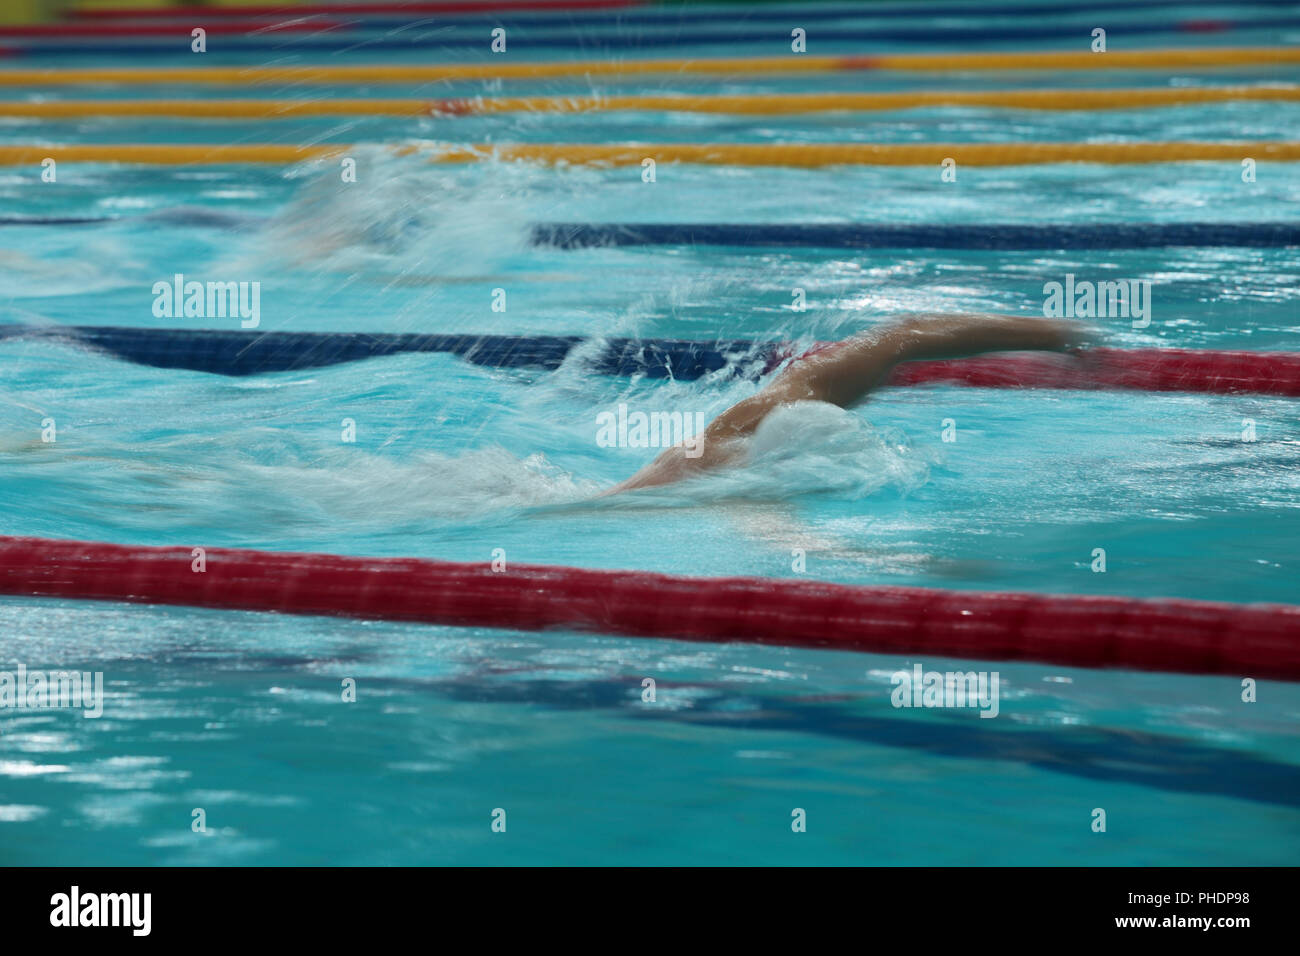 Fast swimmer motion blur Stock Photo